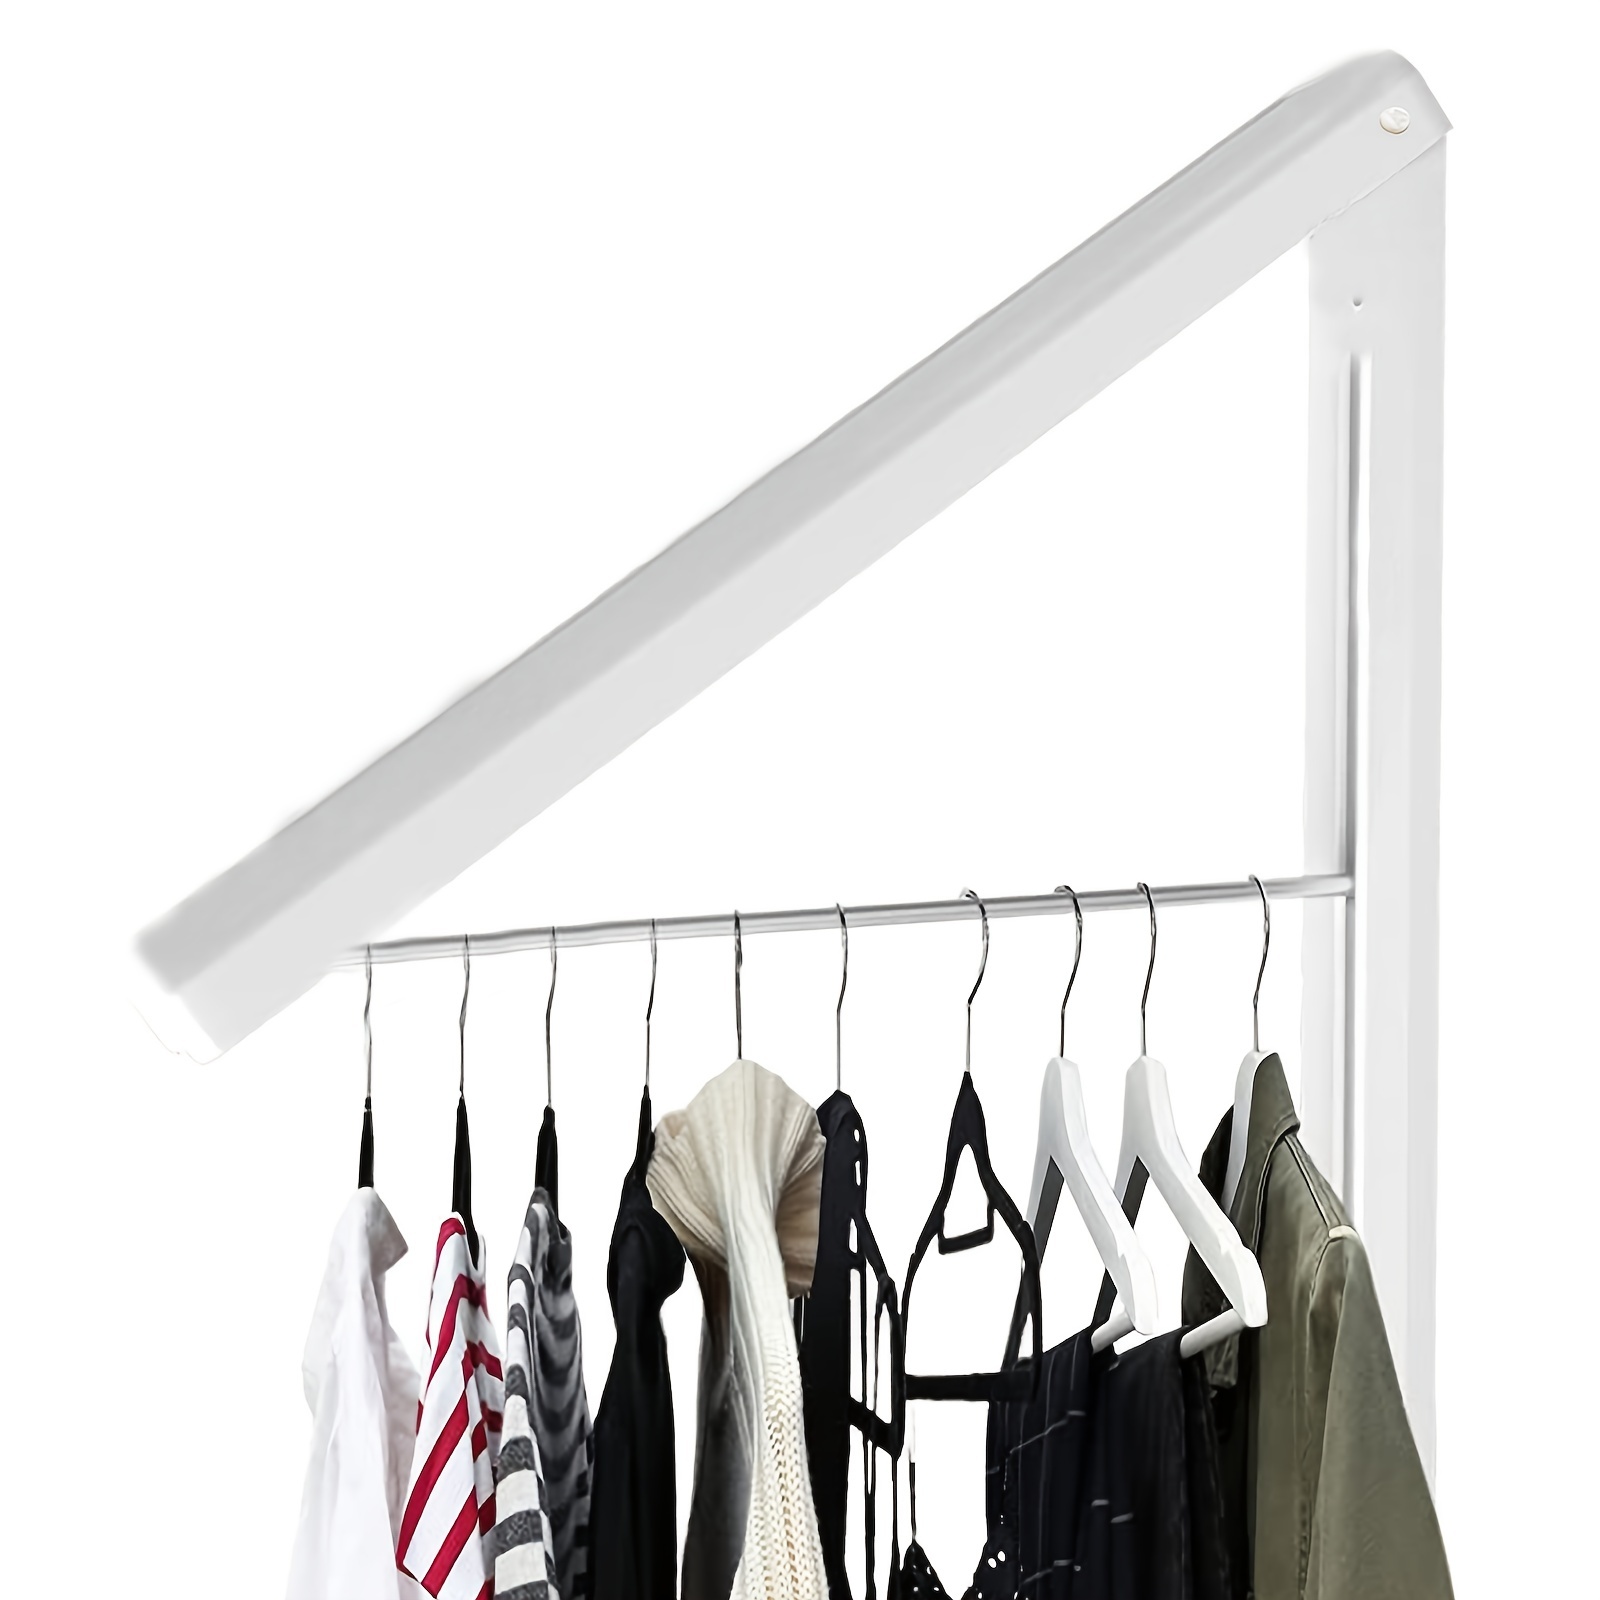 Folding Clothes Hanger